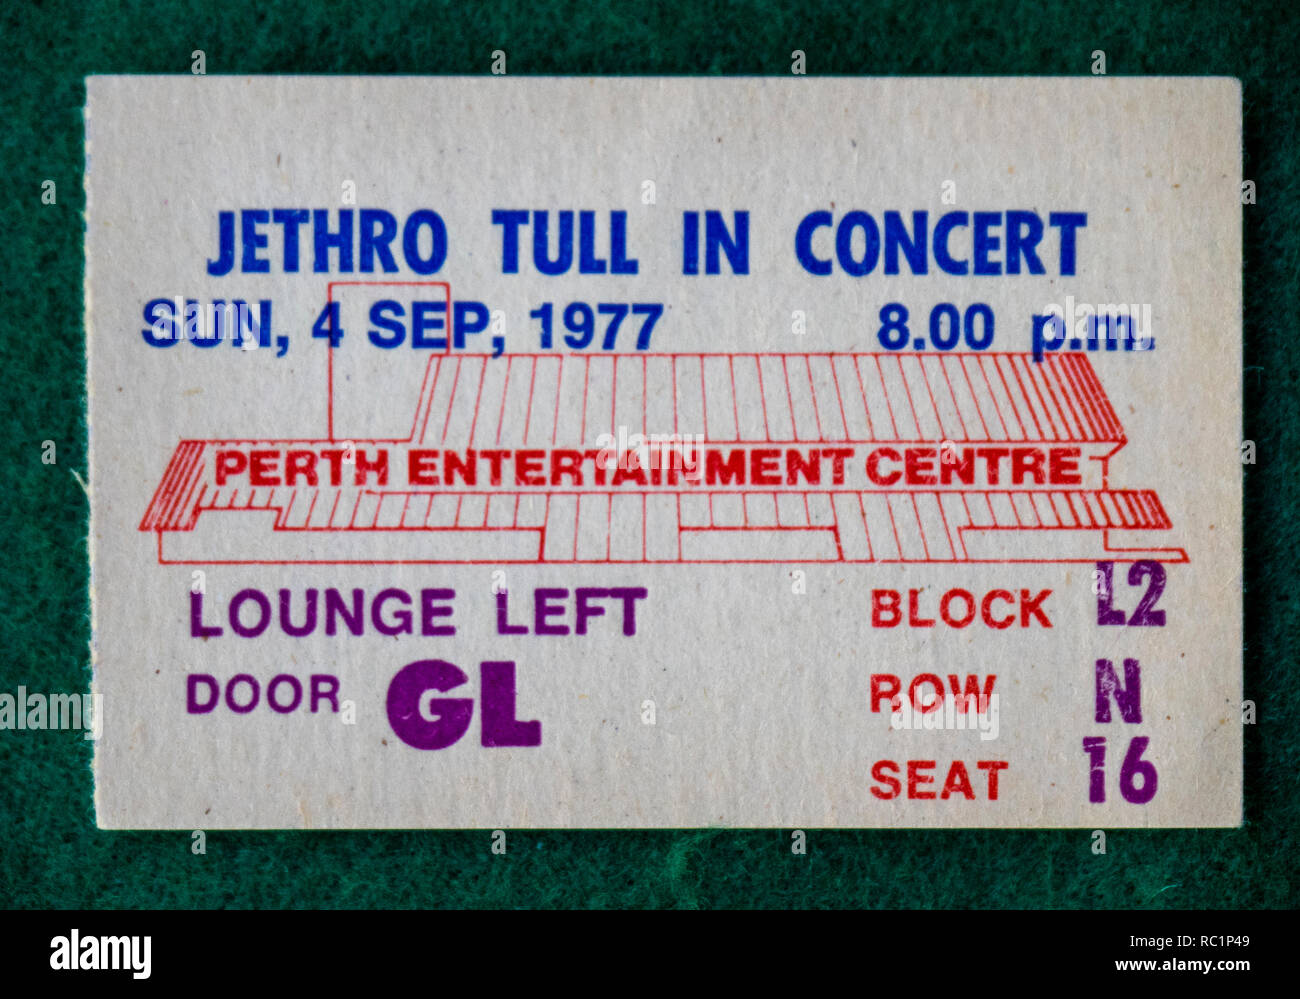 Ticket for Jethro Tull concert at Perth Entertainment Centre in 1977 WA Australia. Stock Photo